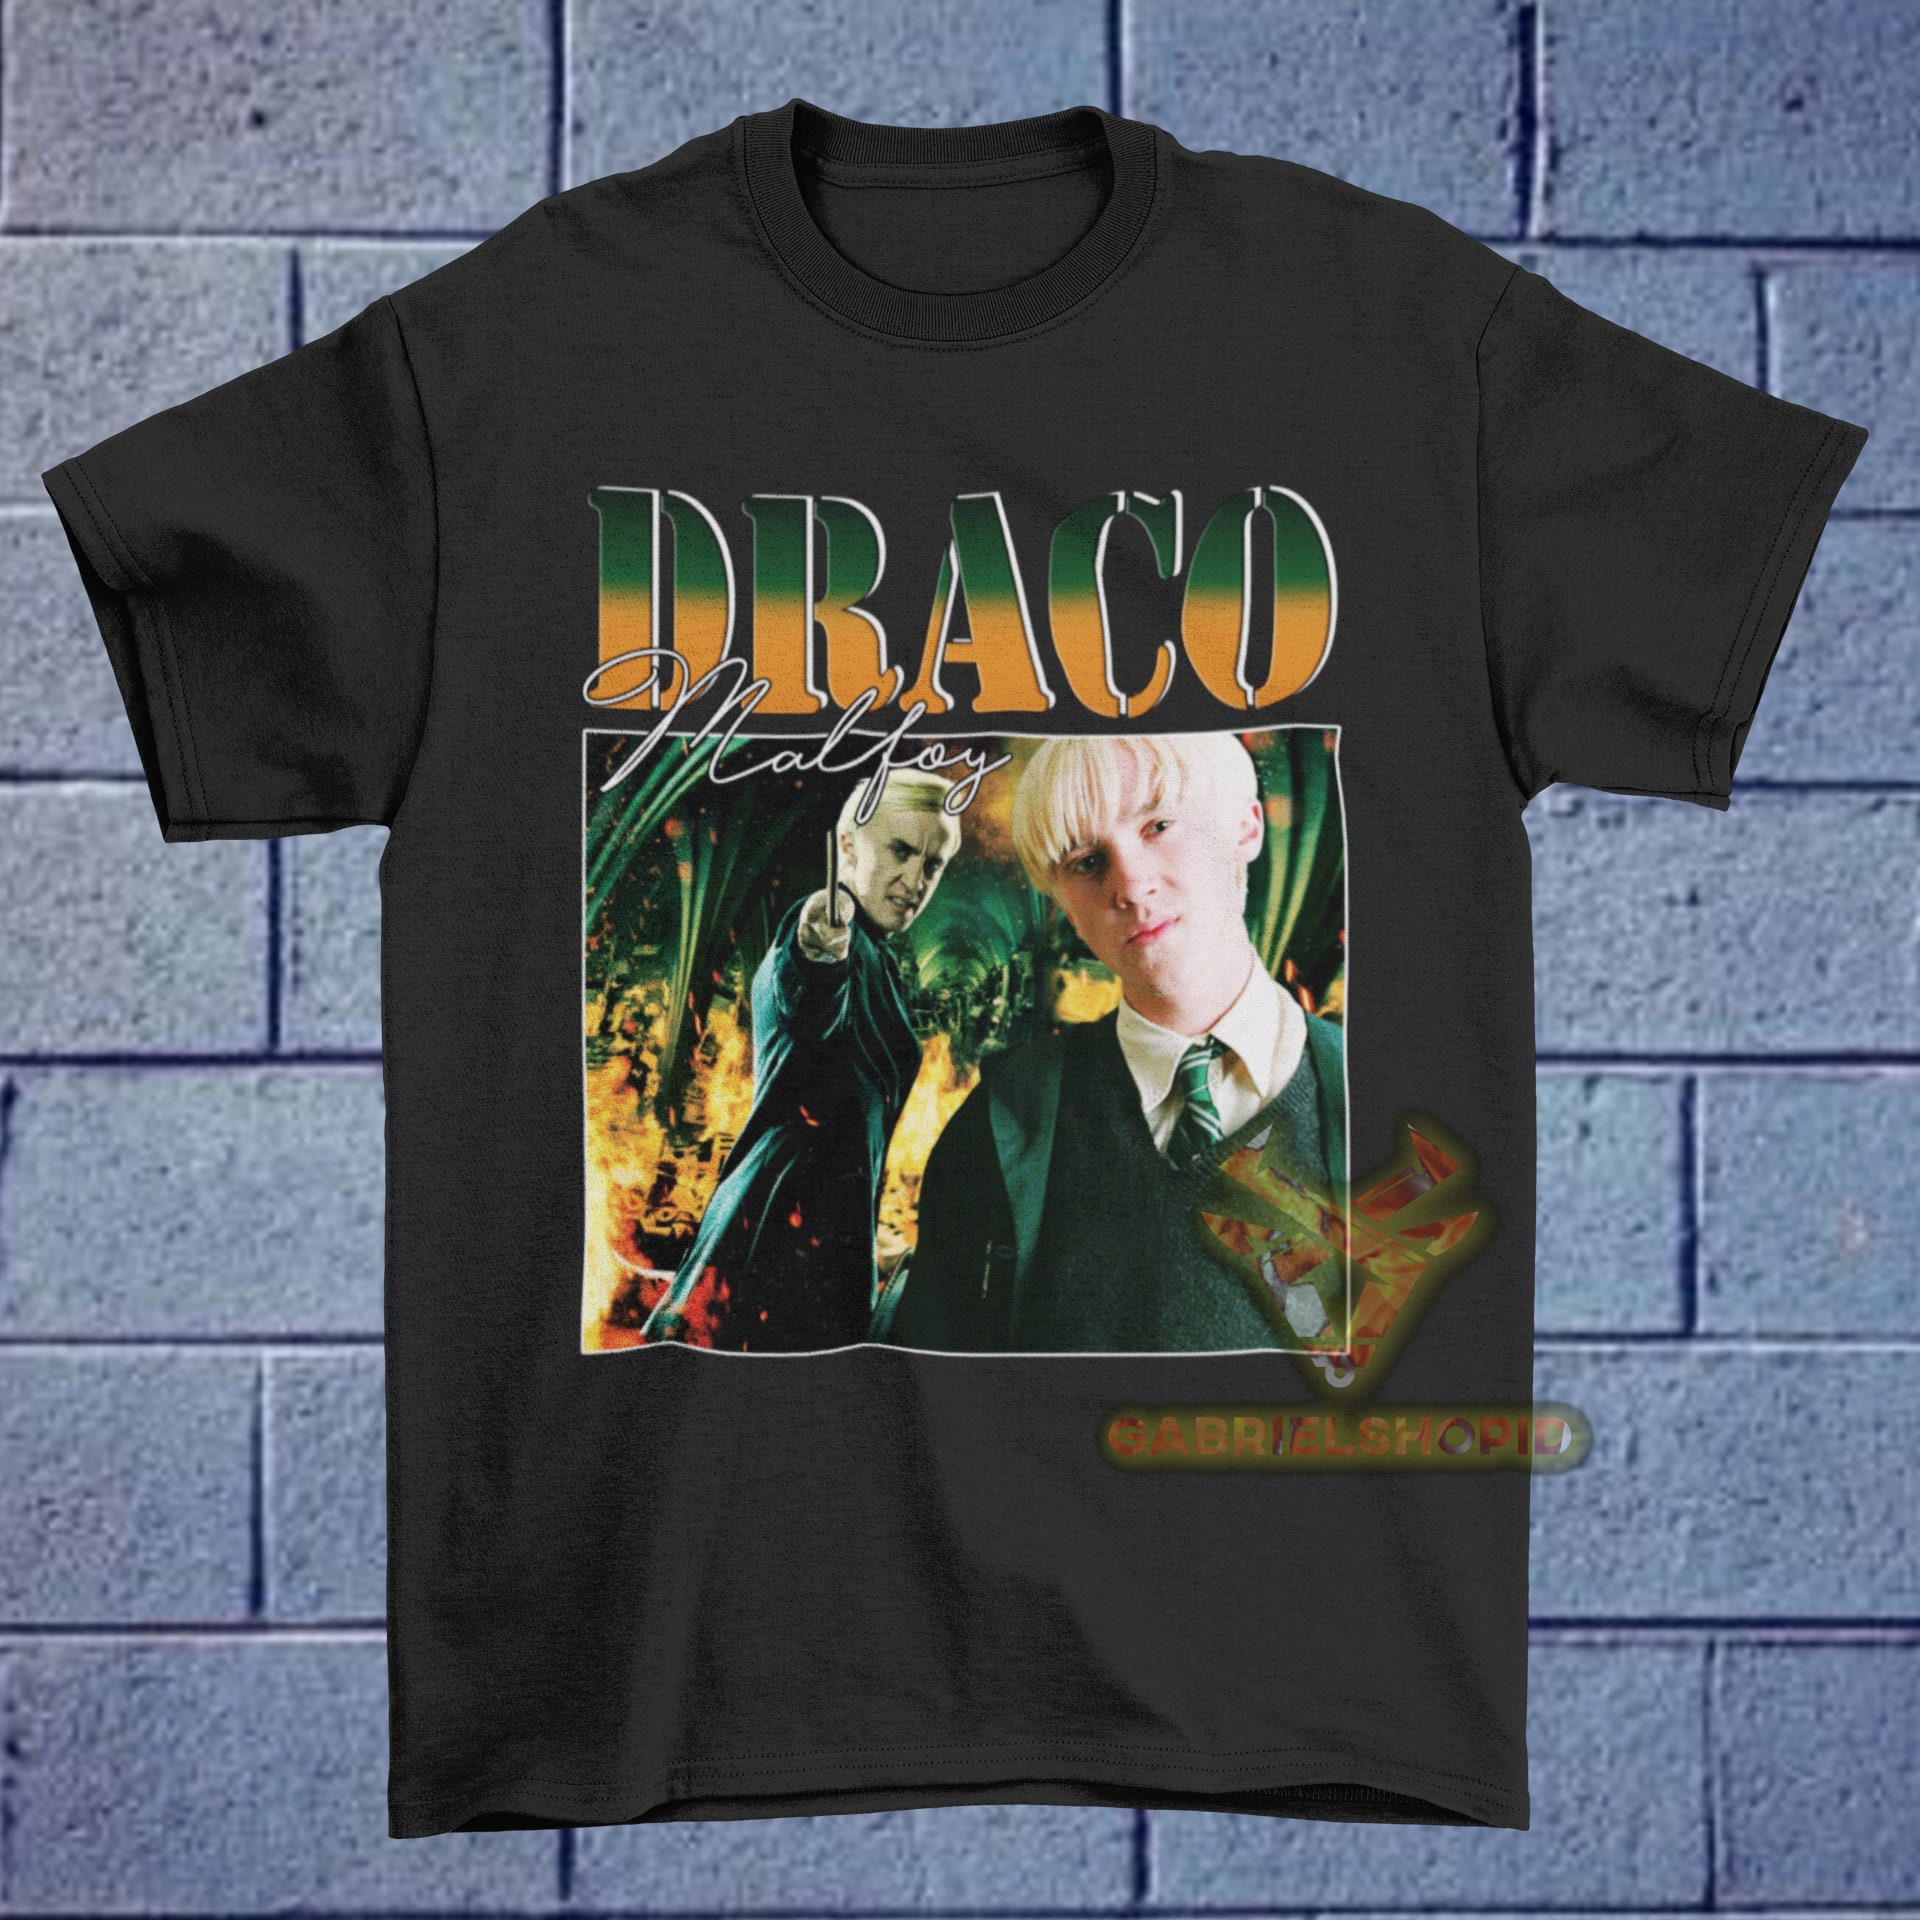 Discover Maglietta T-Shirt Tom Felton Uomo Donna Bambini Draco Malfoy Vintage Inspired Anni '90